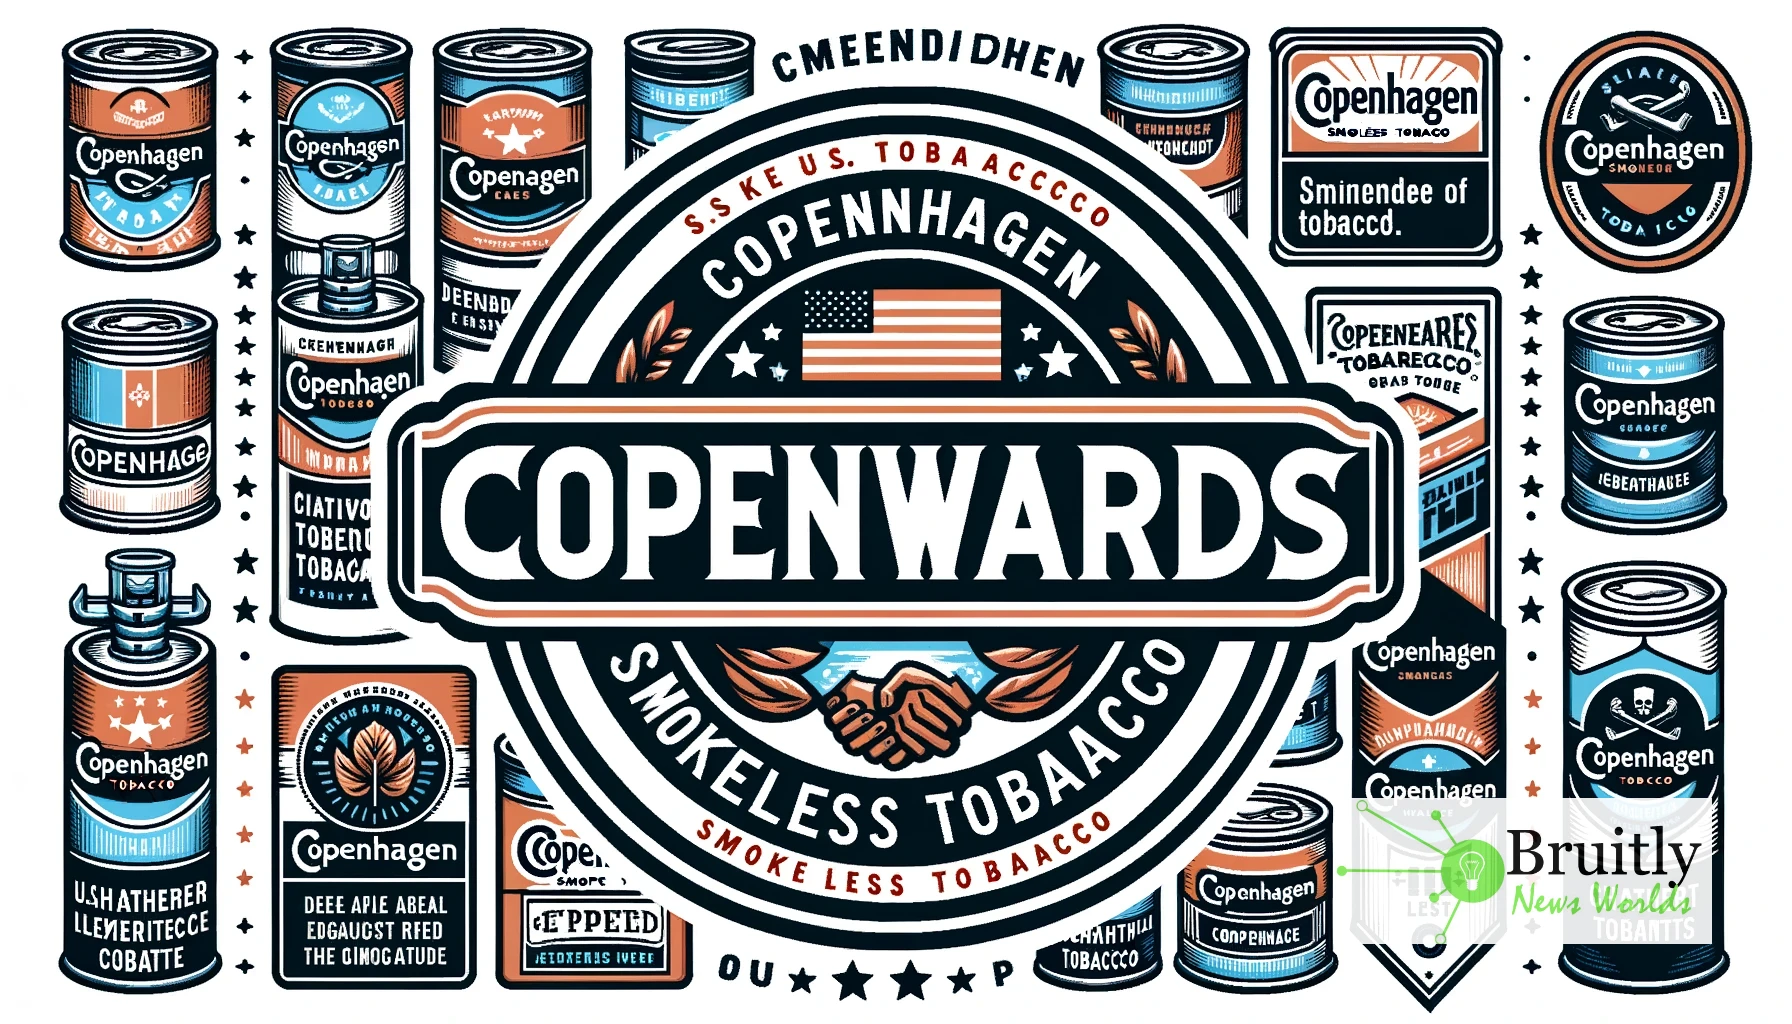 What is Coperewards.com?